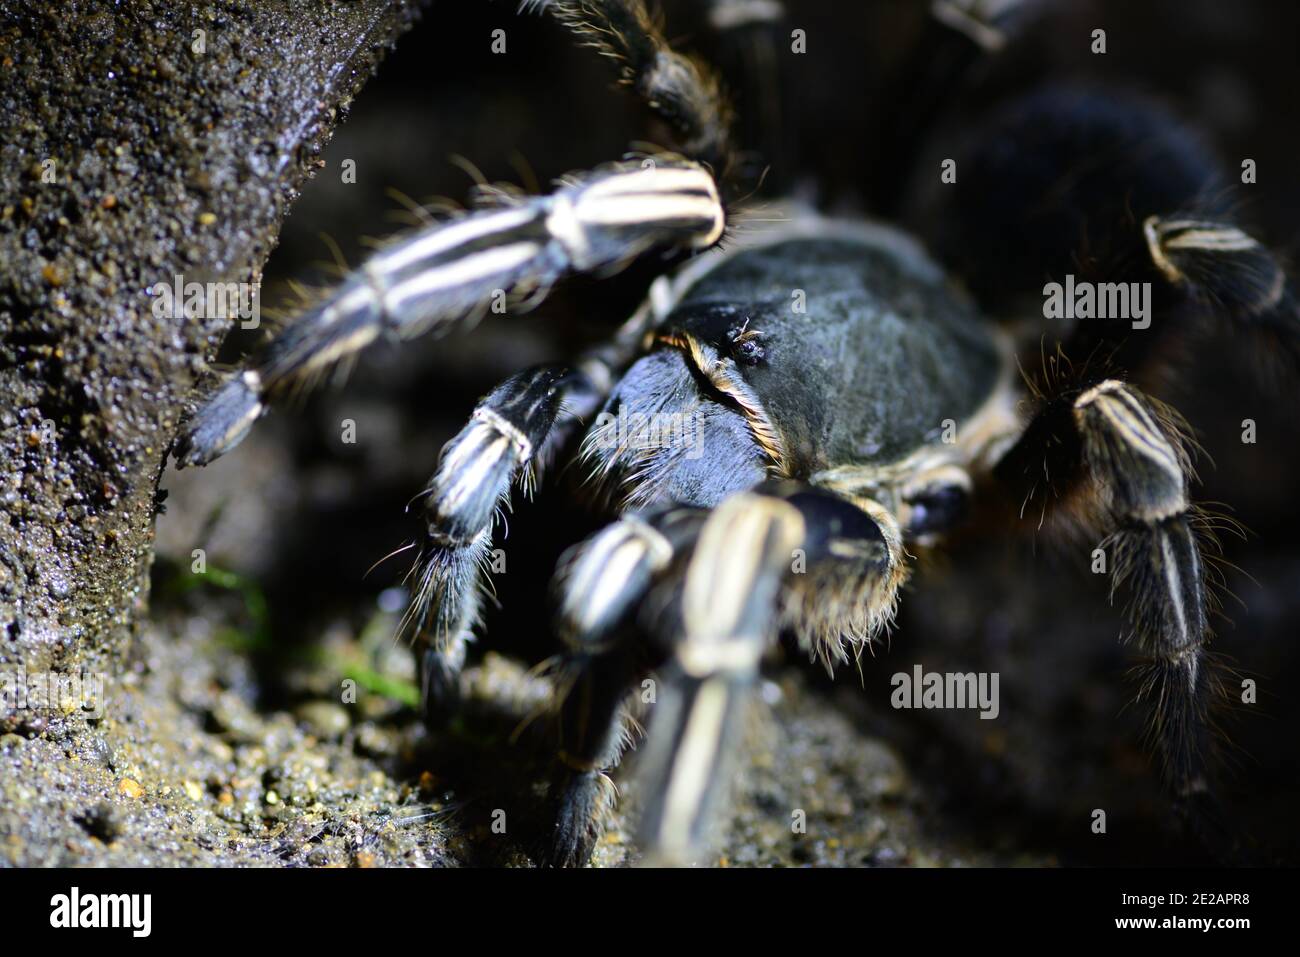 Tarantula zébrée du Costa Rica également connu sous le nom de tarantula à genou rayé (Aphonopelma paratanni) Banque D'Images